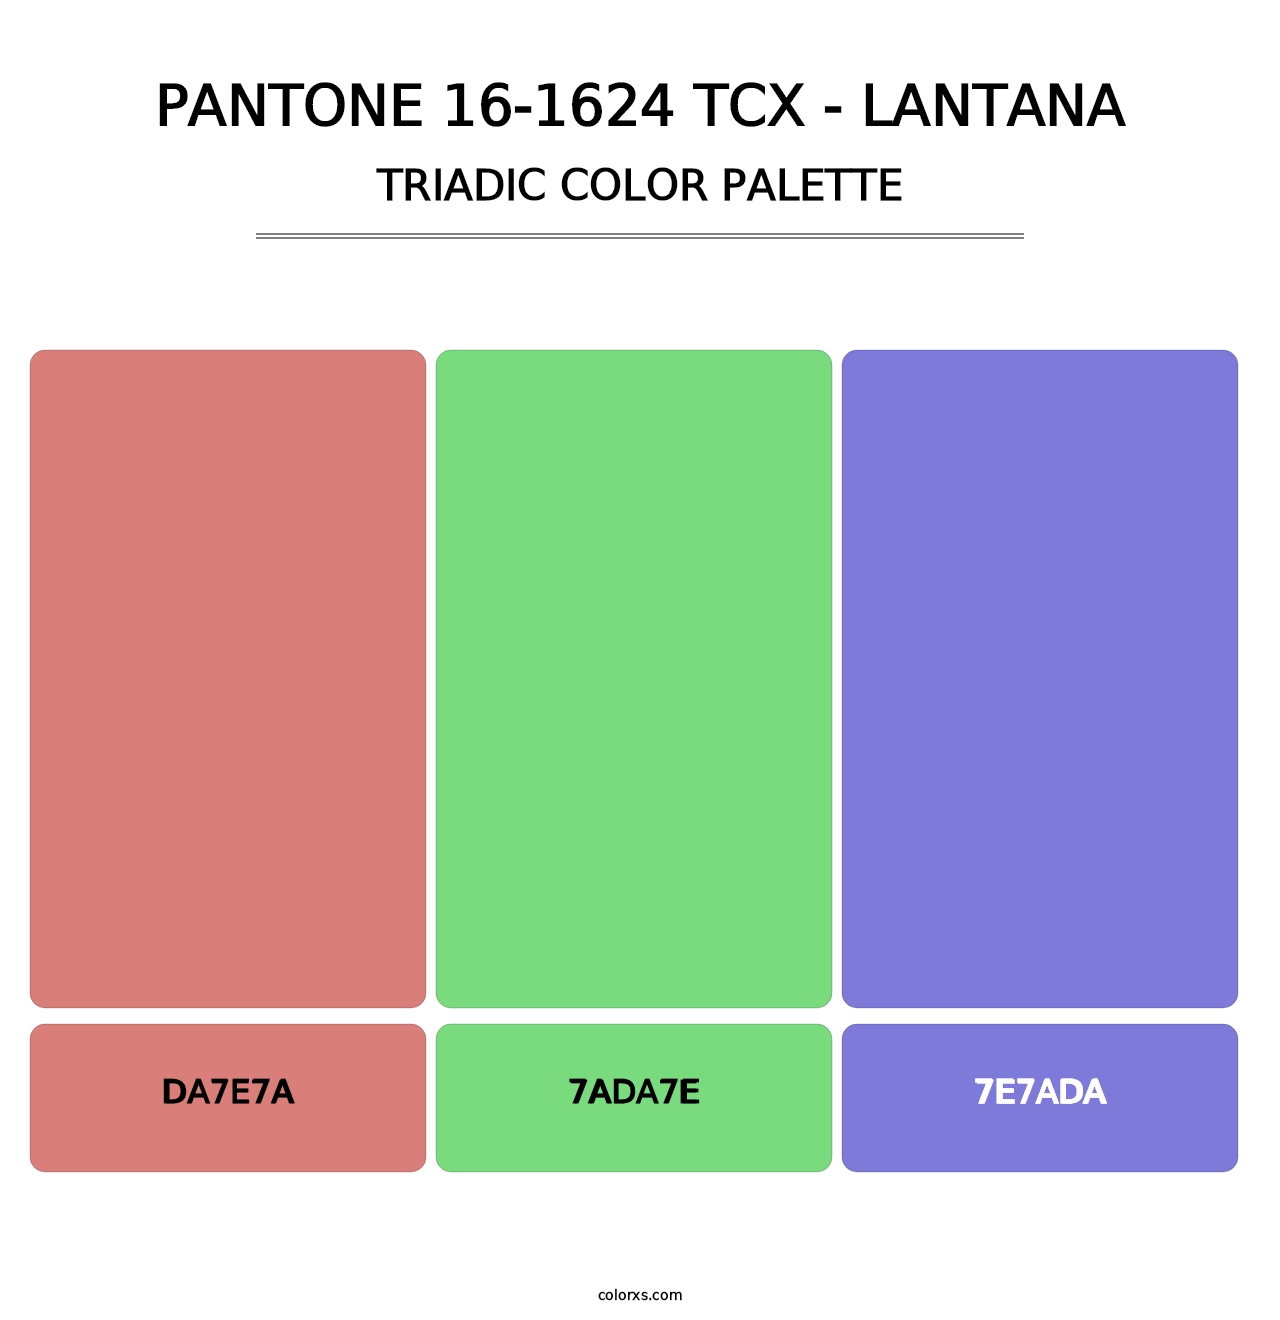 PANTONE 16-1624 TCX - Lantana - Triadic Color Palette